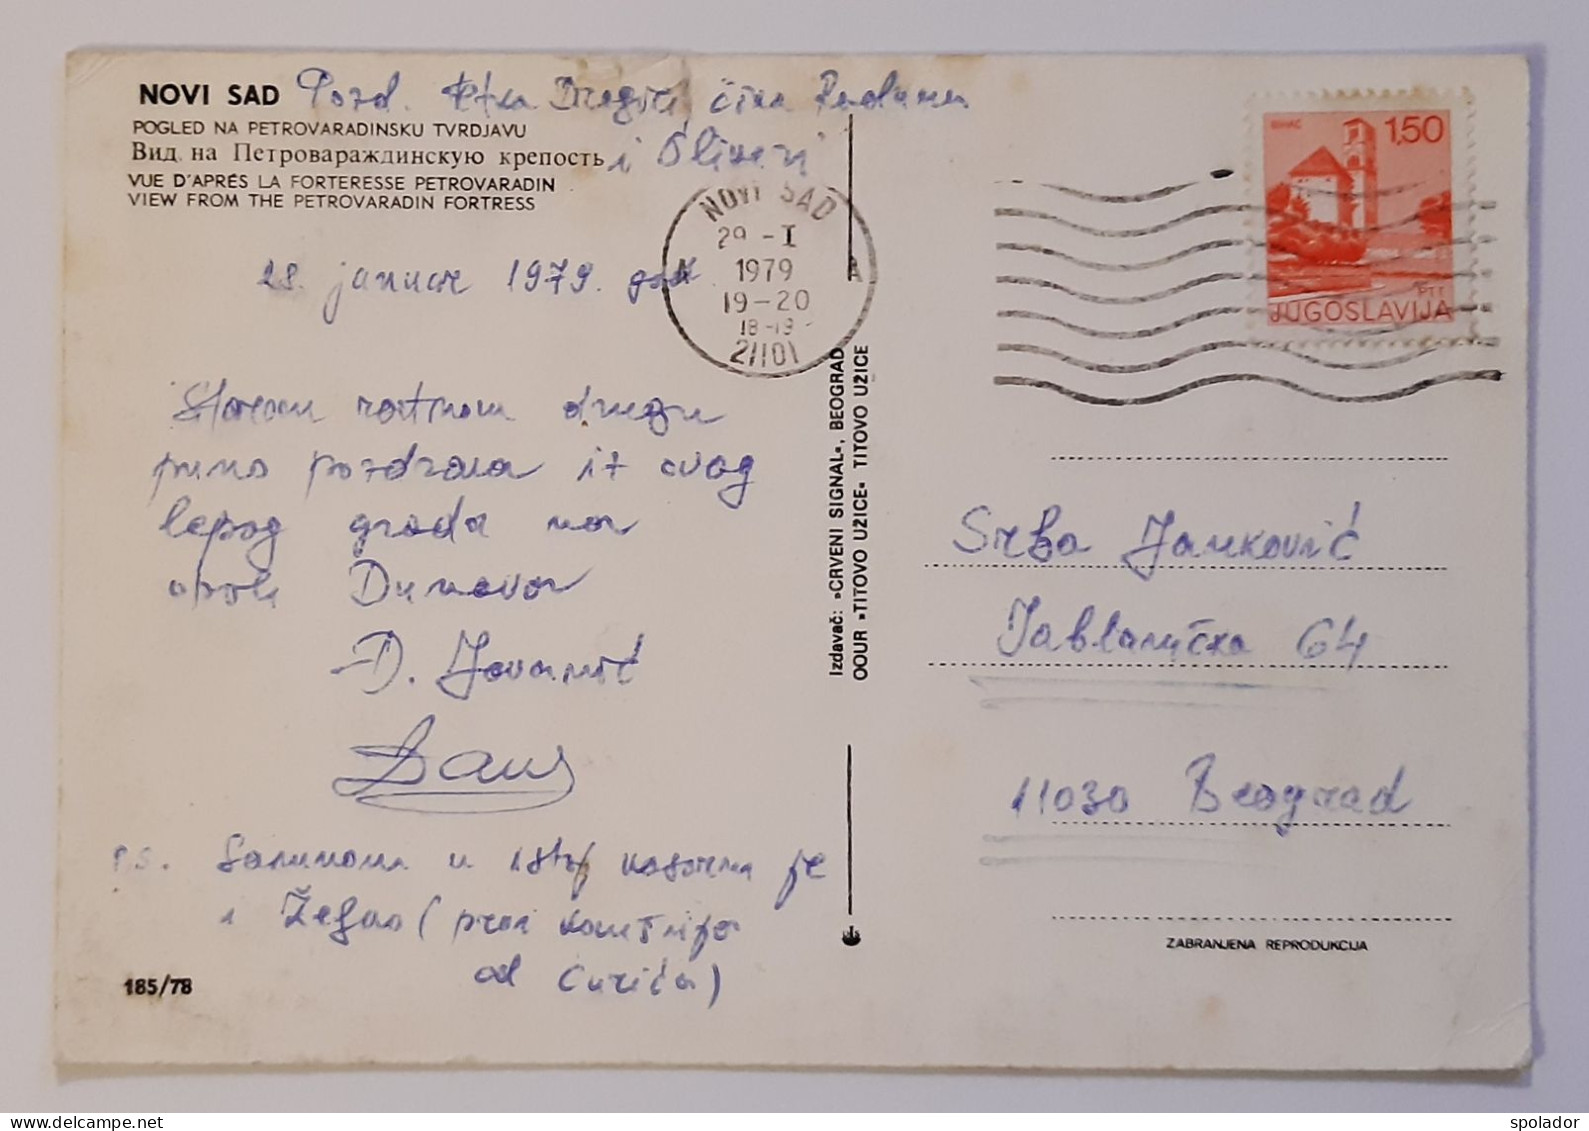 NOVI SAD-Ex-Yugoslavia-Vintage Postcard-Serbia-View From The Petrovaradin Fortress-1979-used With Stamp - Joegoslavië